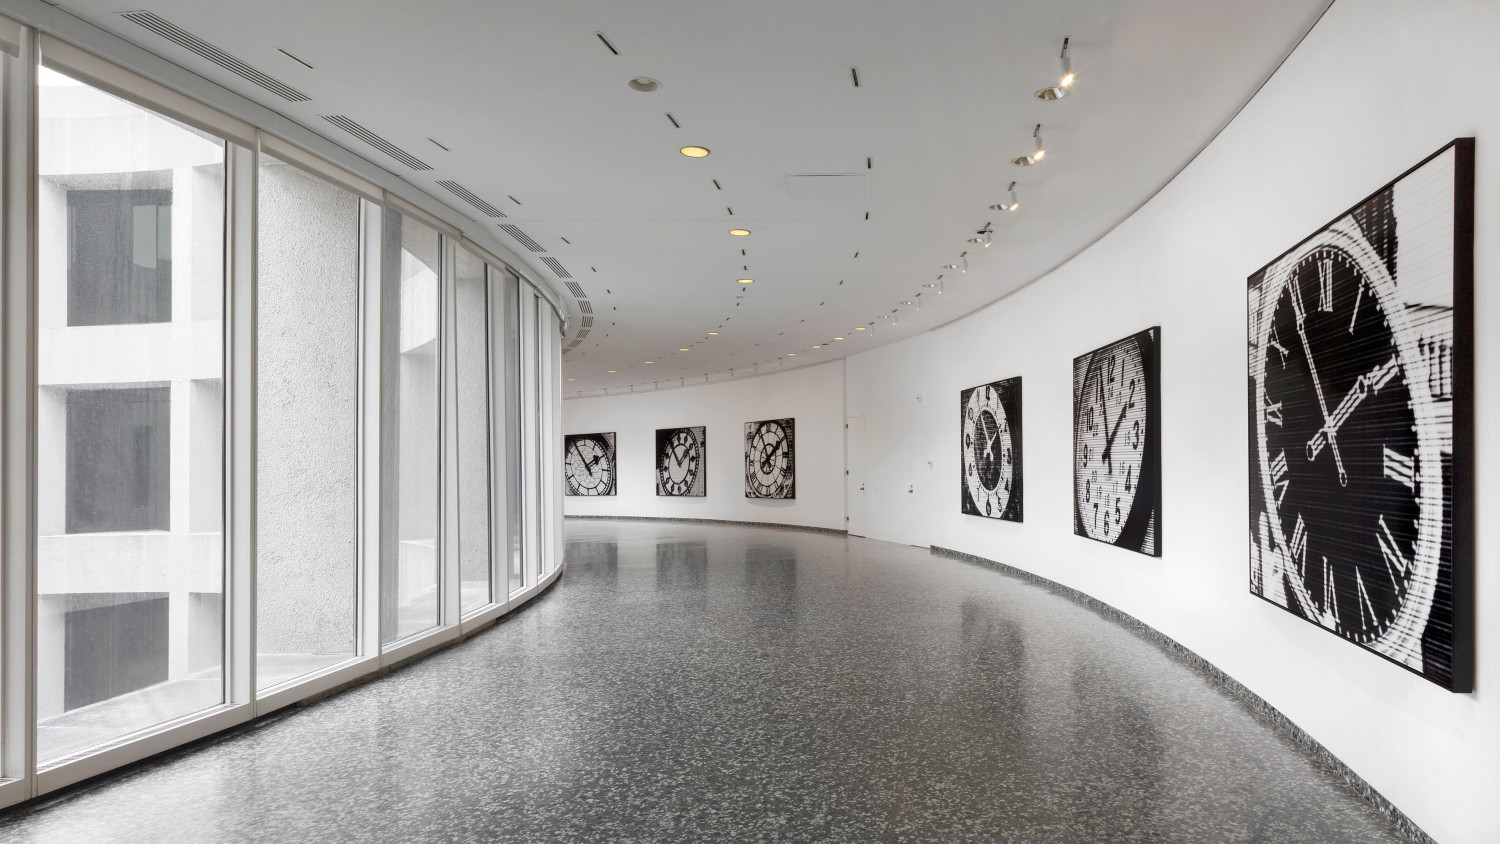 Bettina Pousttchi, ‘World Time Clock, The Hirshhorn Museum and Sculpture Garden, Washington D.C.’, Installation view, 2016–2017, 24 photographs